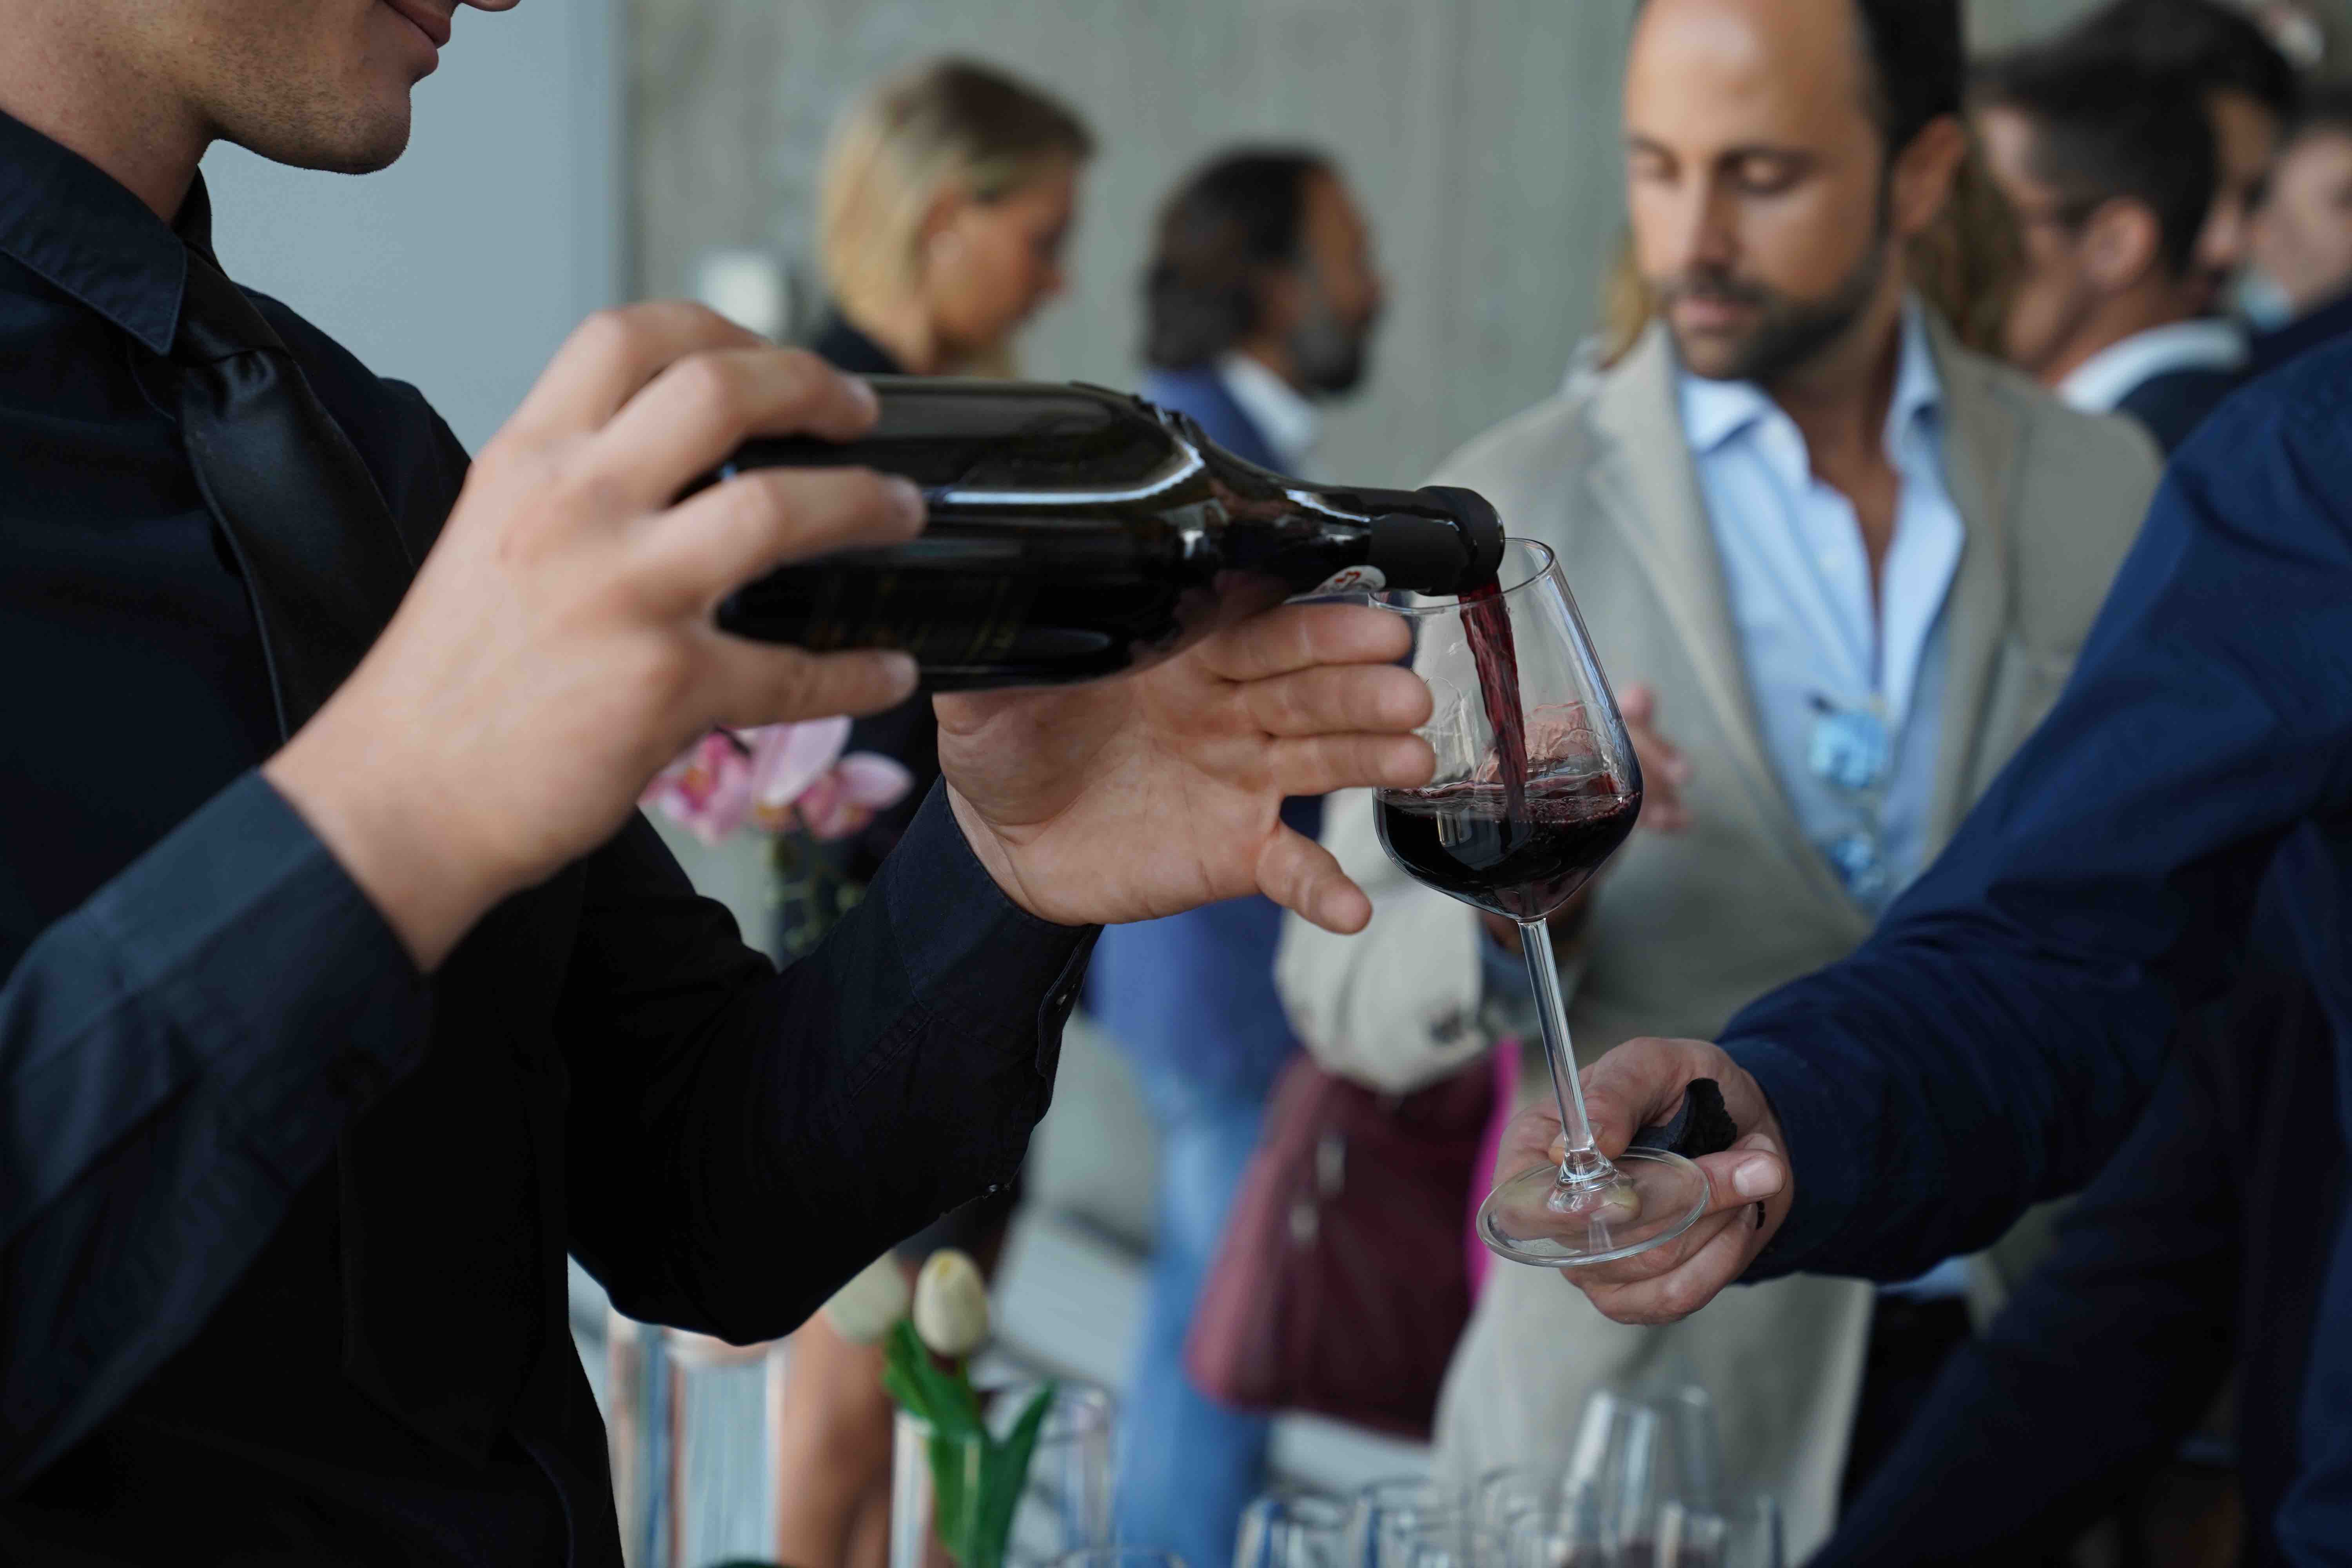 Milano Wine Week is here, and you can drink Leonardo Da Vinci wines